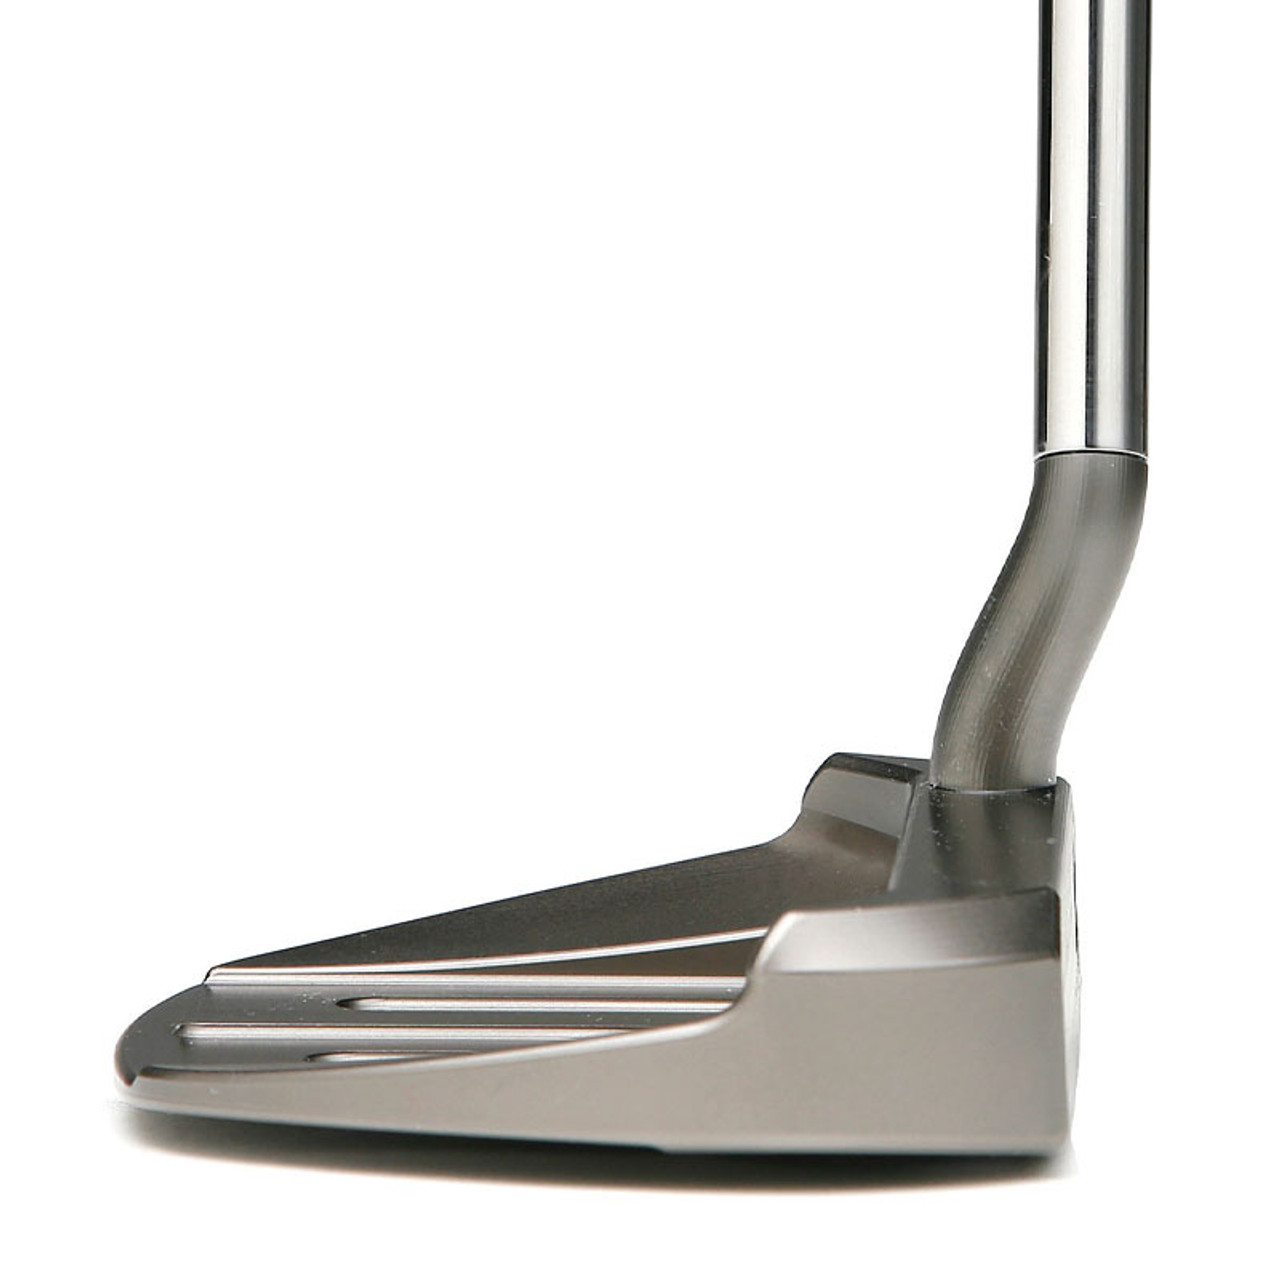 The GolfWorks PXG Shaft Adaptor - The GolfWorks